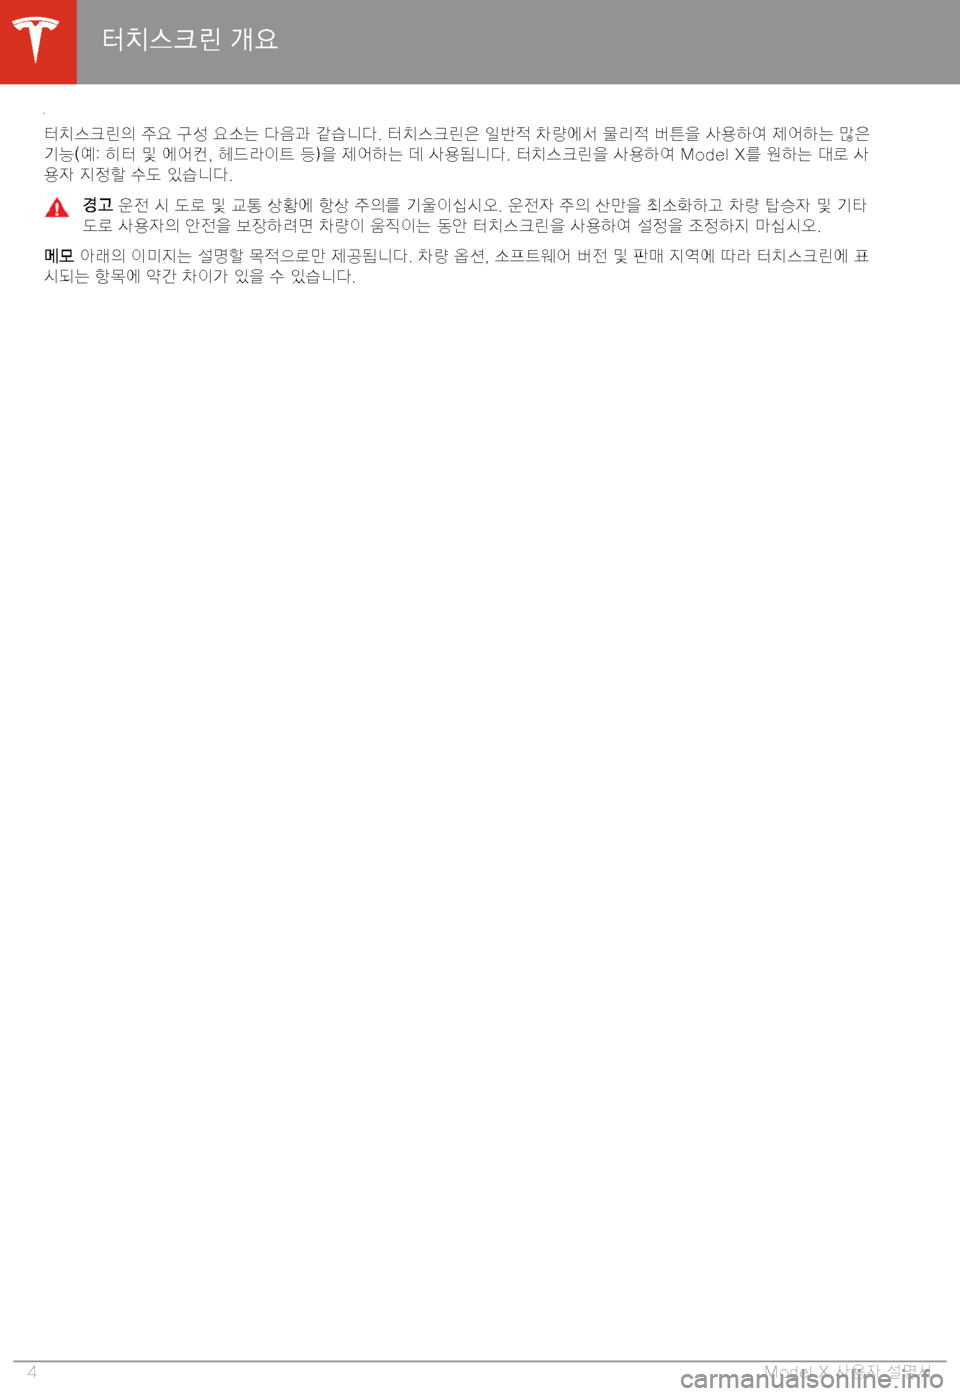 TESLA MODEL X 2020  사용자 가이드 (in Korean)  GMDu8